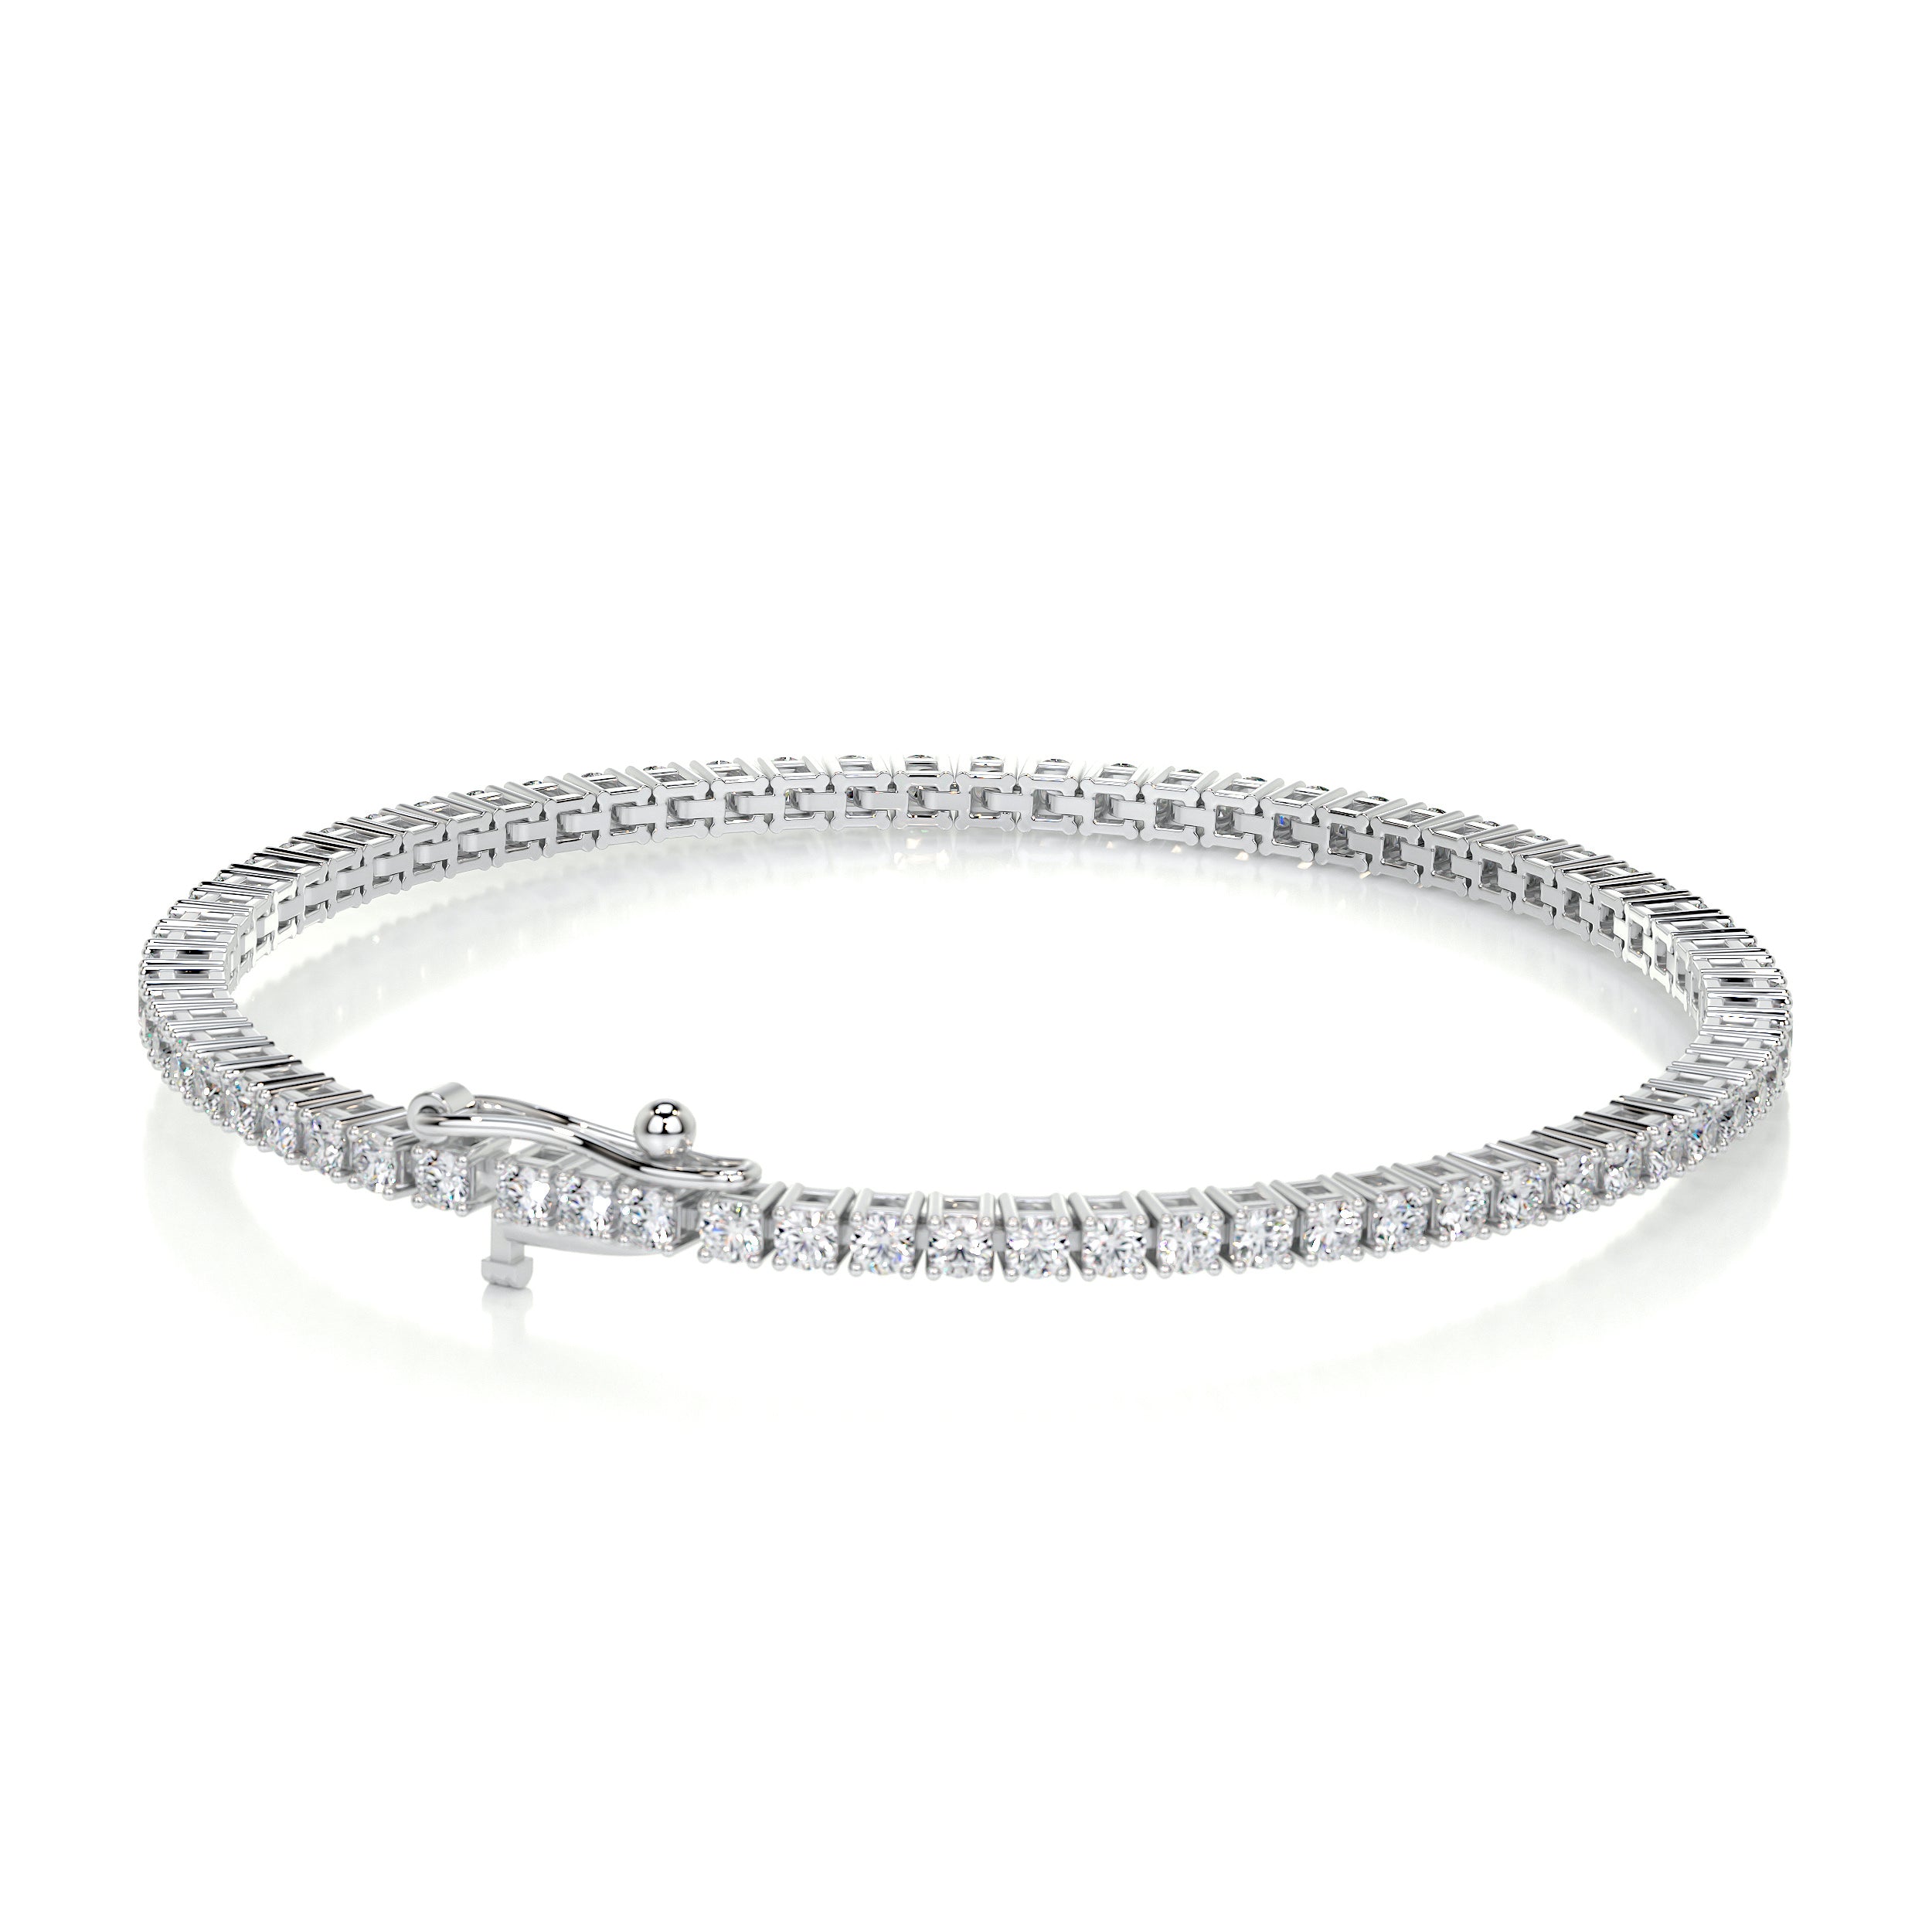 Sidney Tennis Diamonds Bracelet   (2.5 Carat) -14K White Gold